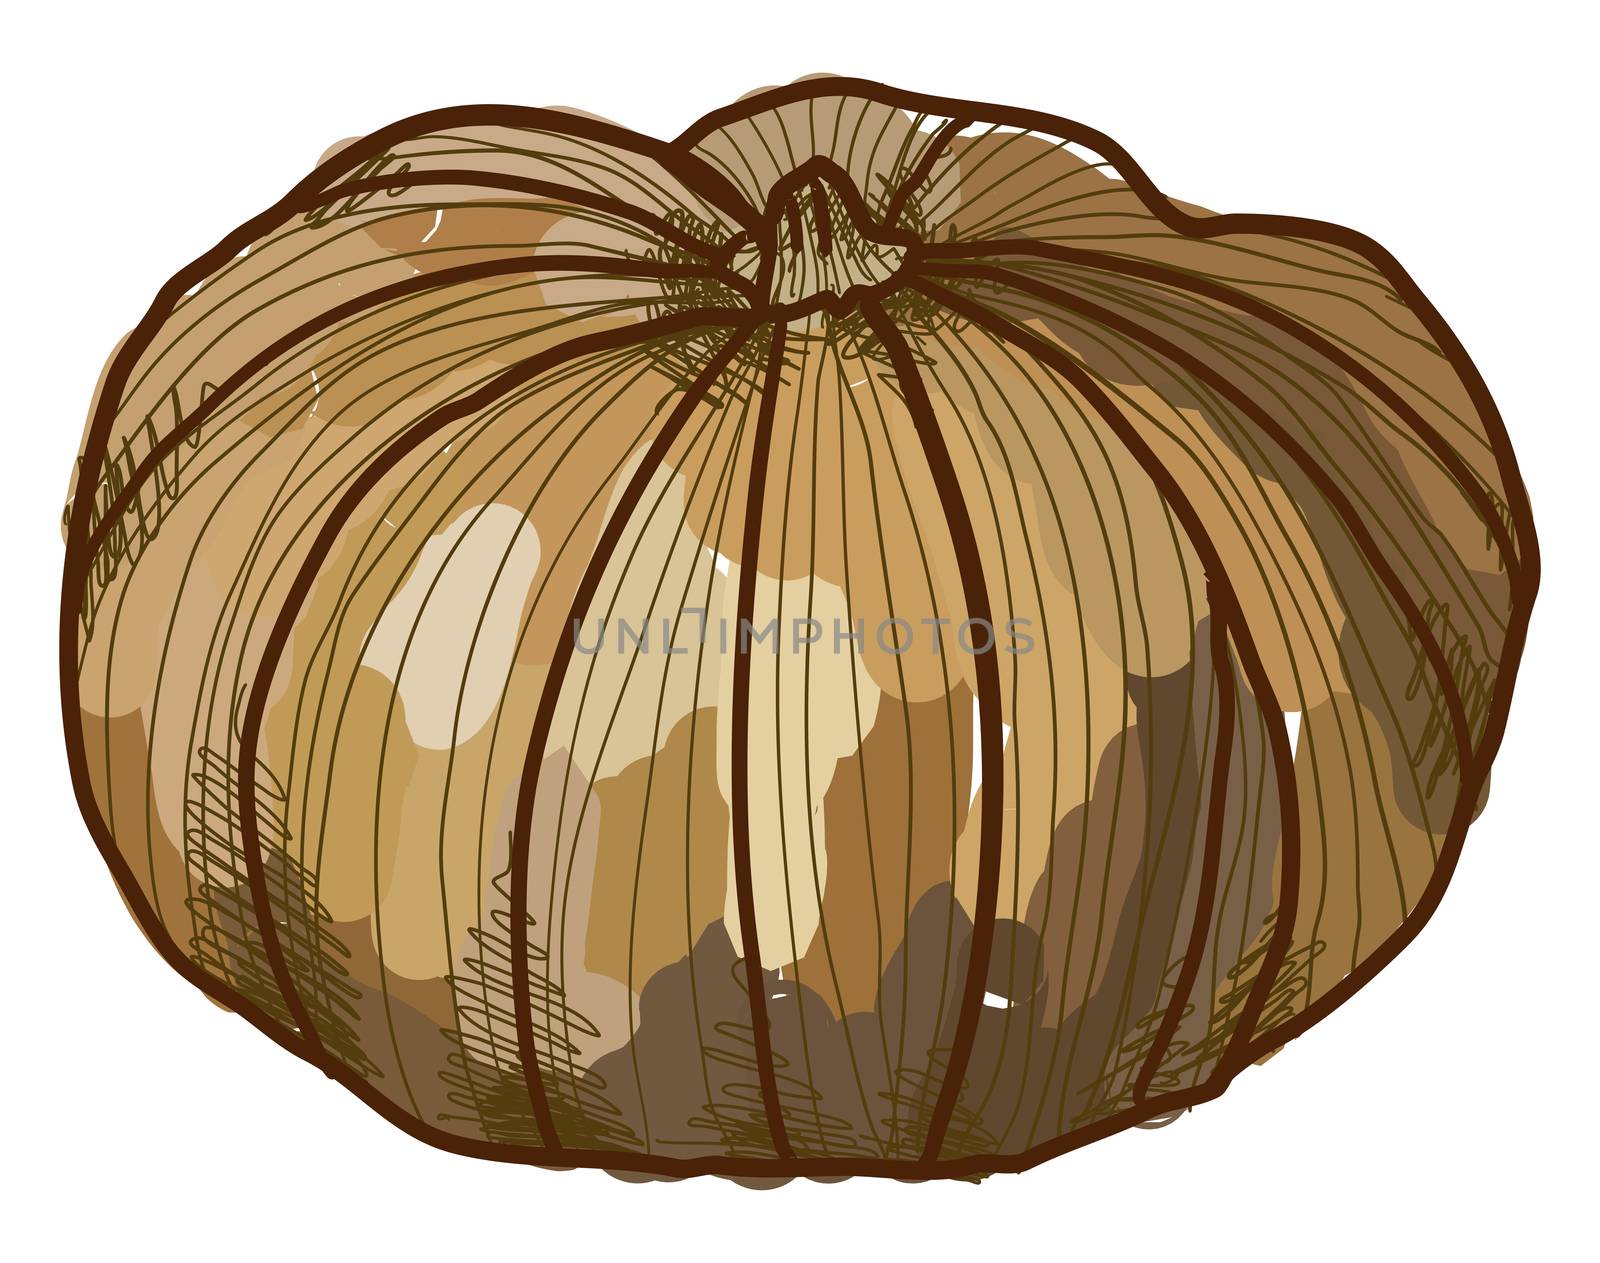 Cheese pumpkin, illustration, vector on white background